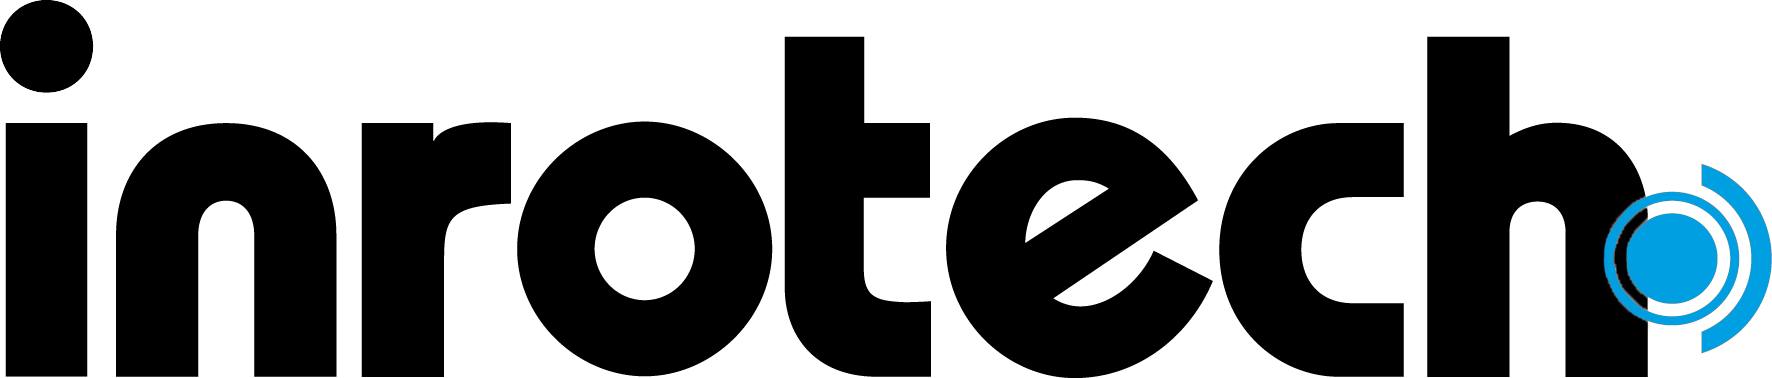 Inrotech-logo